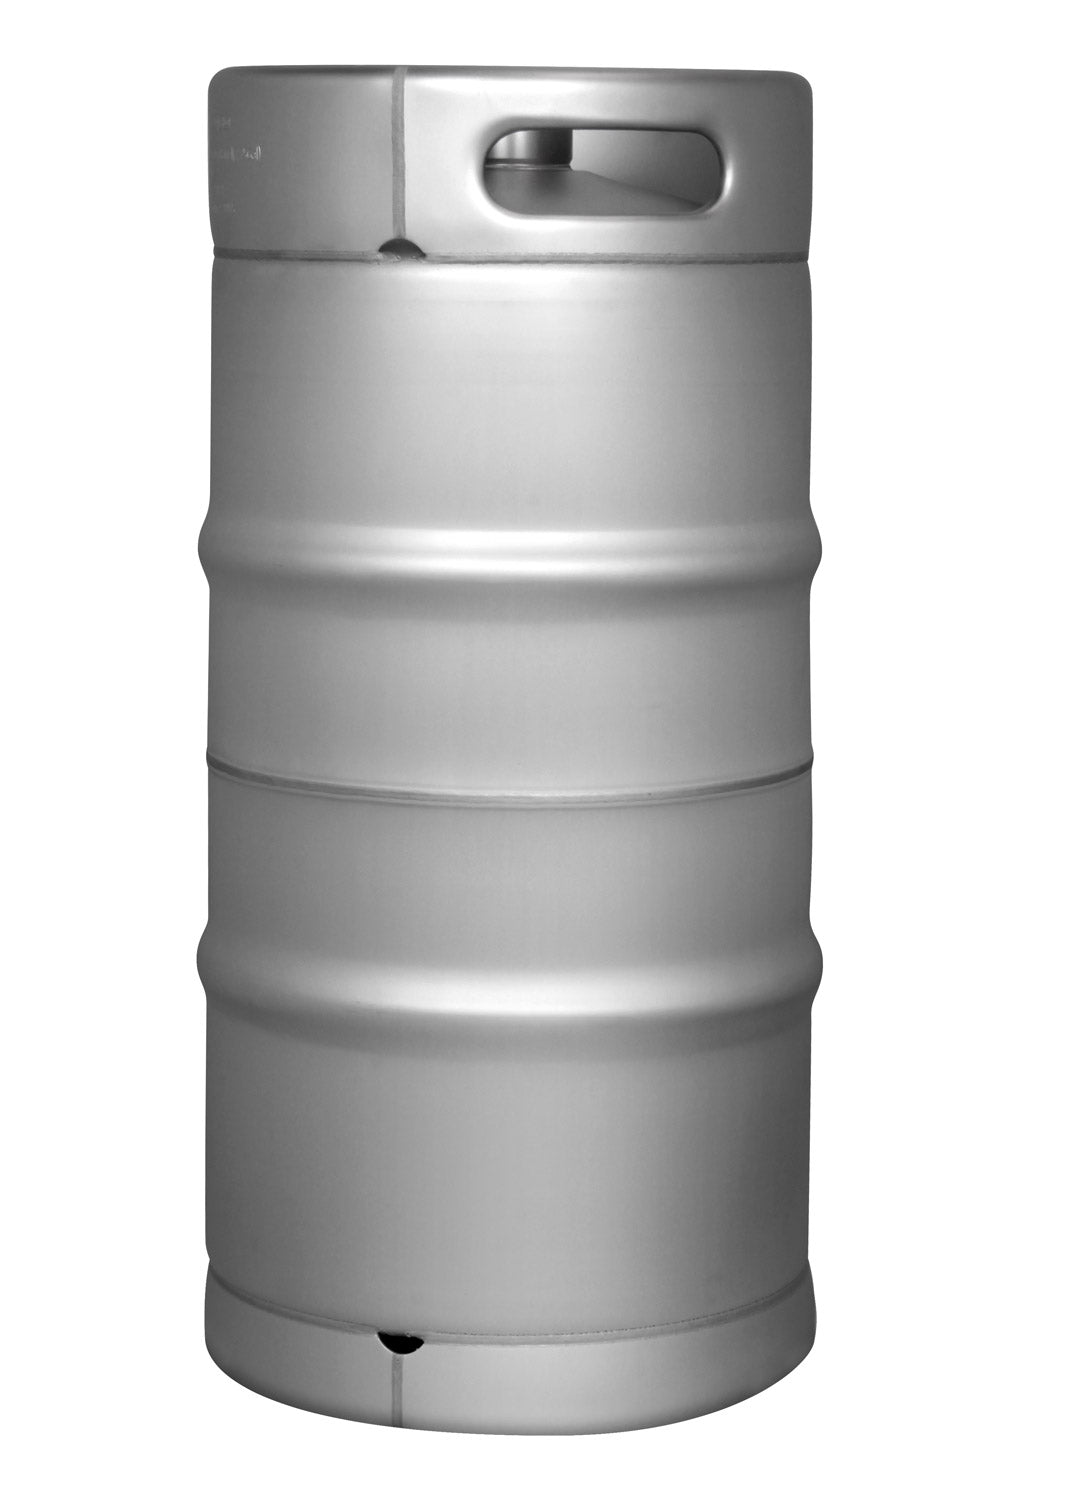 Kegco HS-K7.75G-DDI Keg - Brand New 7.75 Gallon Commercial Kegs - Drop-In D System Sankey Valve